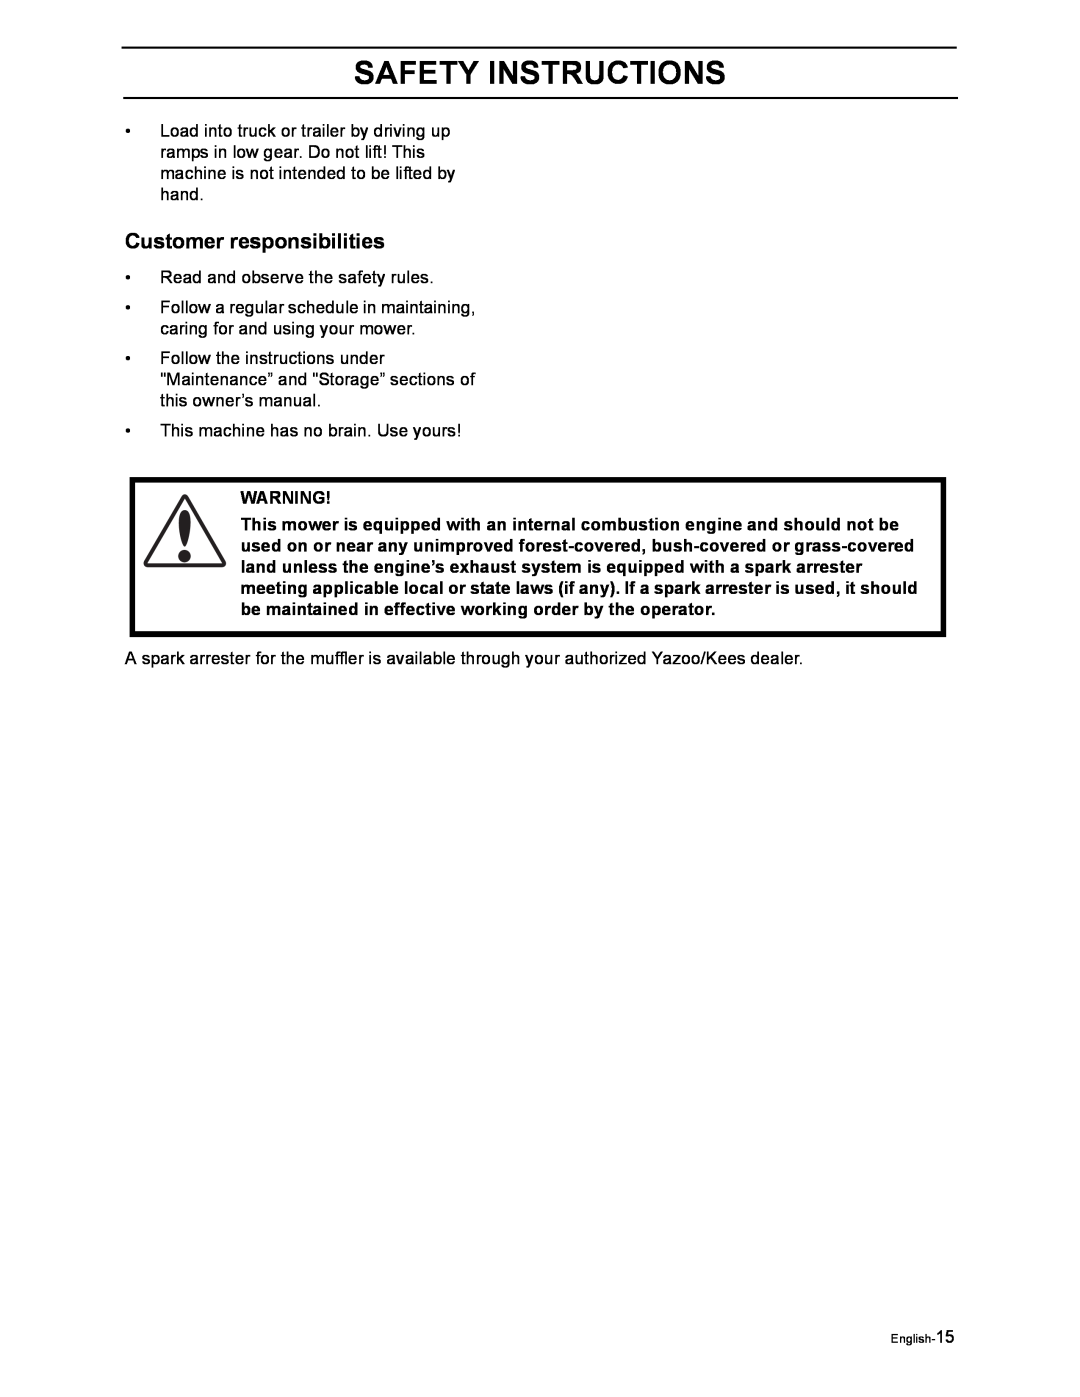 Yazoo/Kees ZEKW48190 manual Customer responsibilities, Safety Instructions 